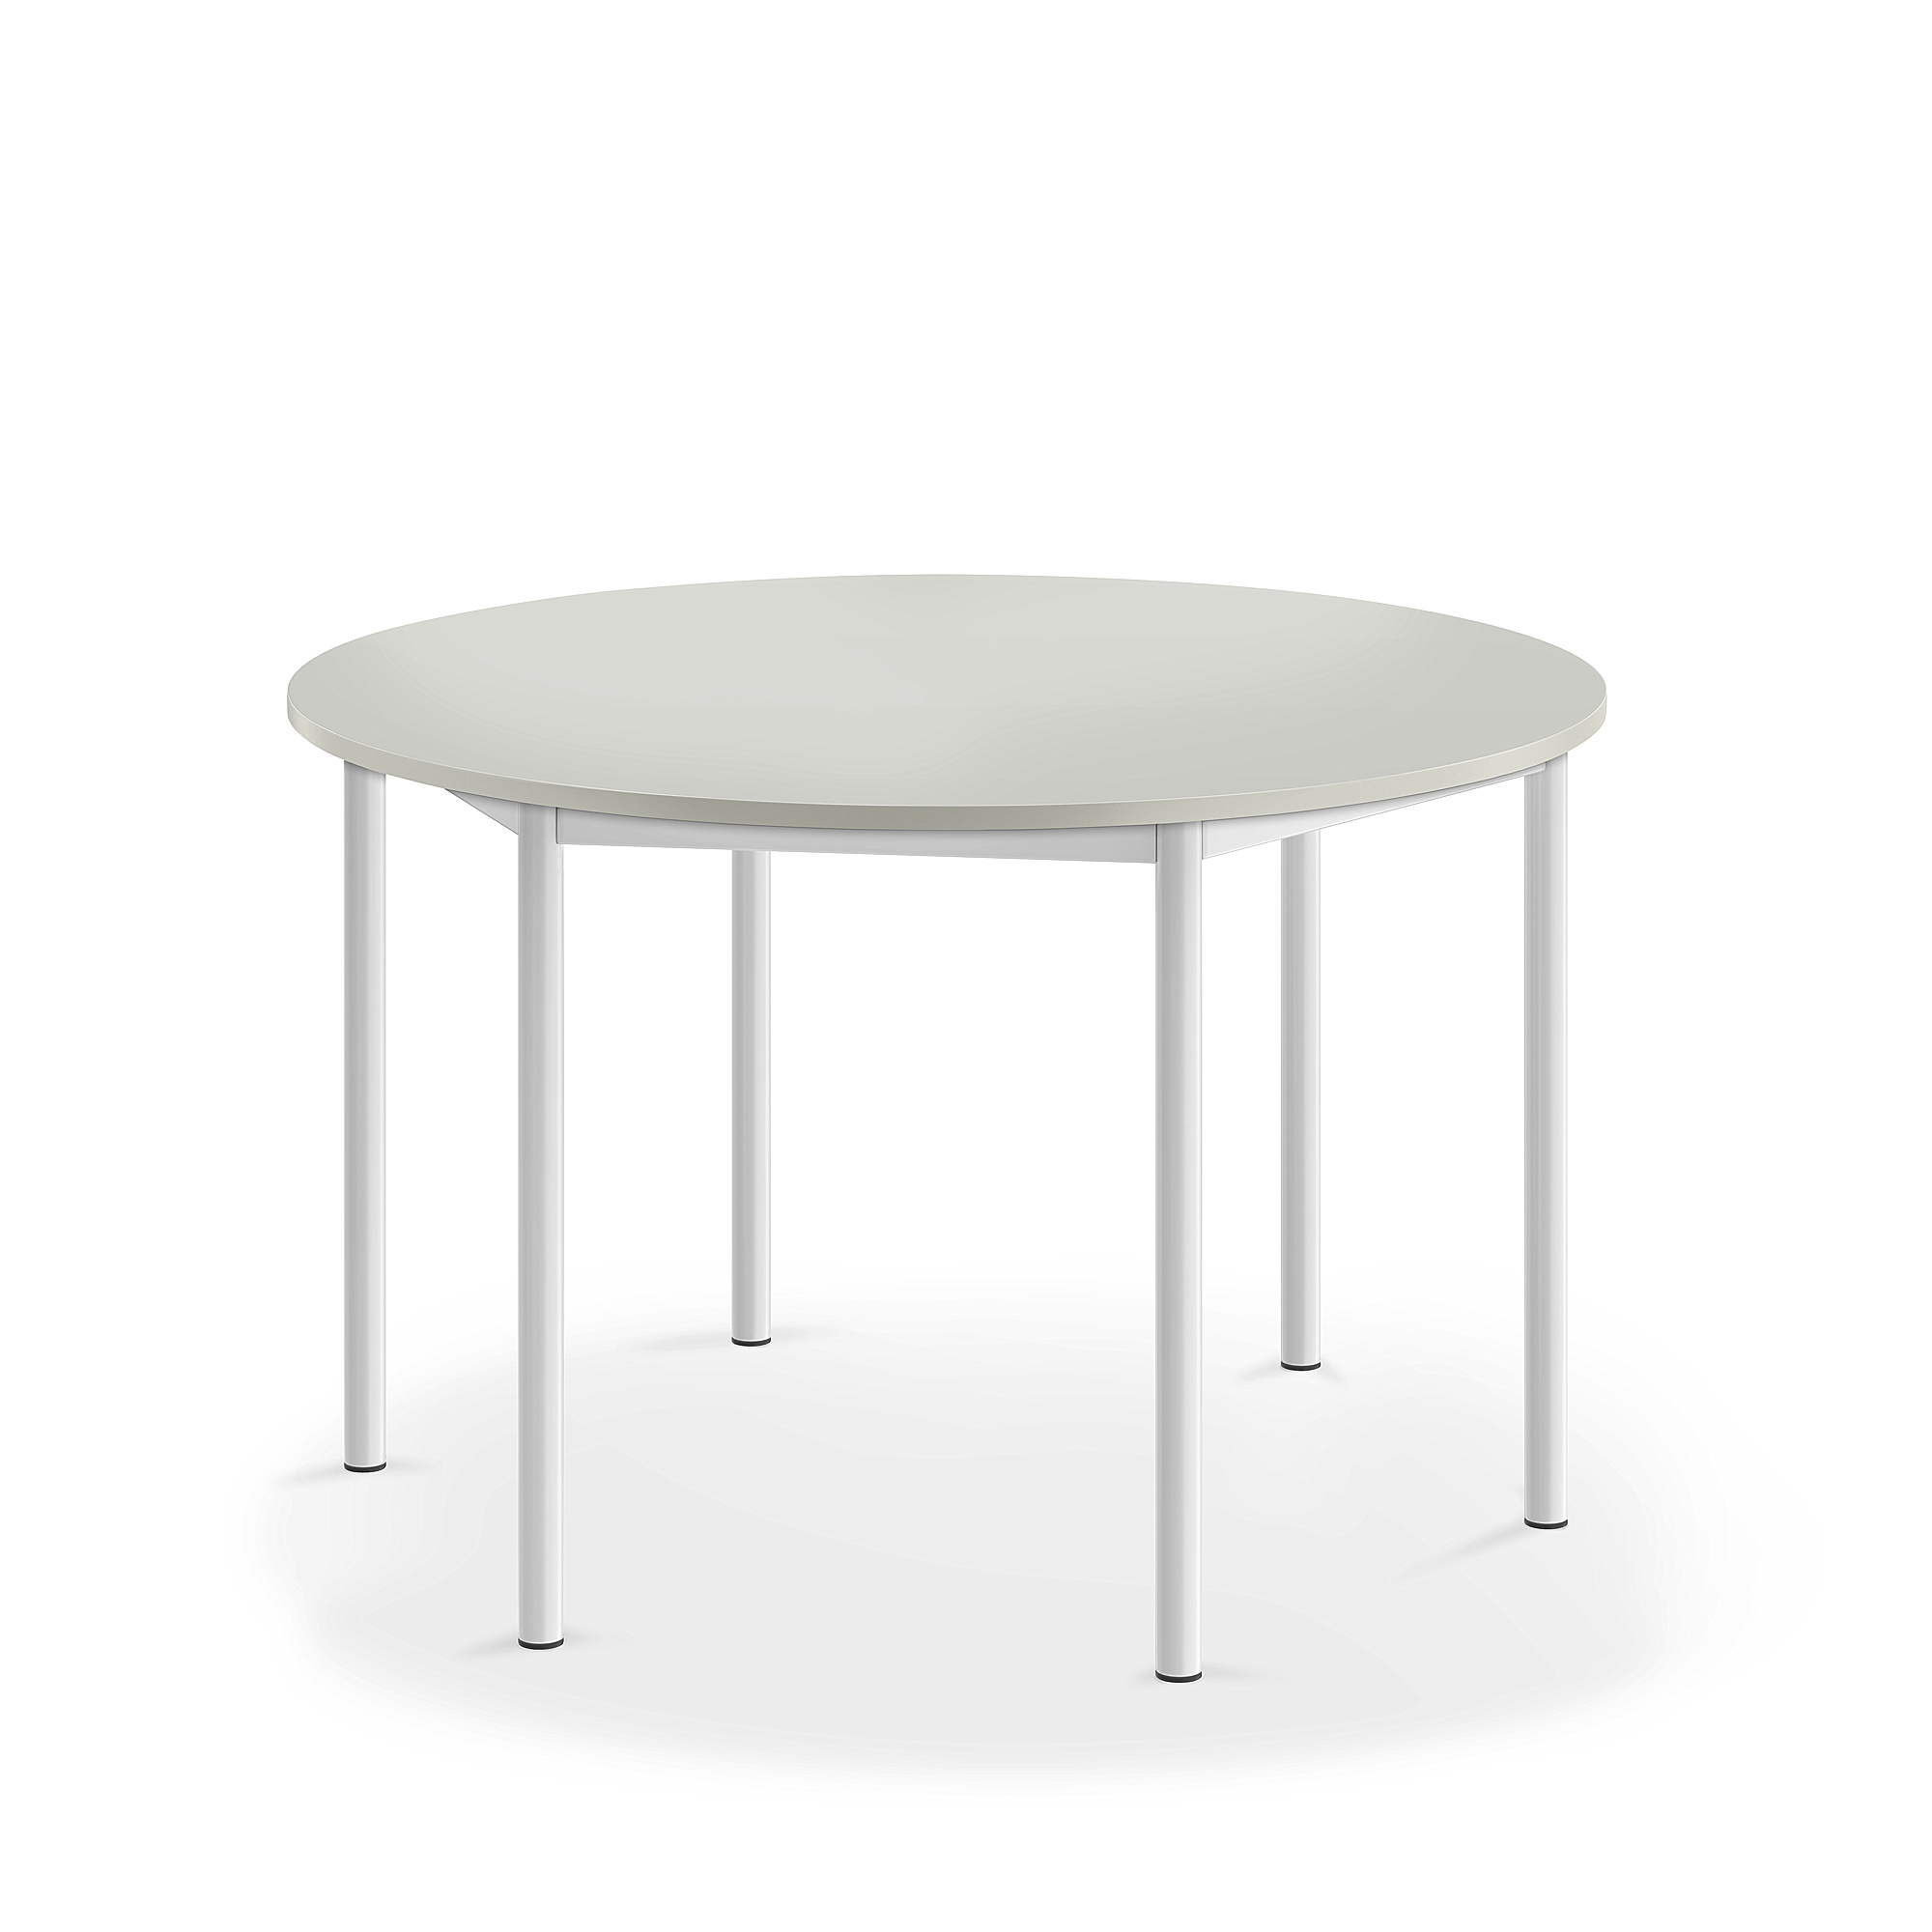 Stůl SONITUS, Ø1200x720 mm, bílé nohy, HPL deska tlumící hluk, šedá